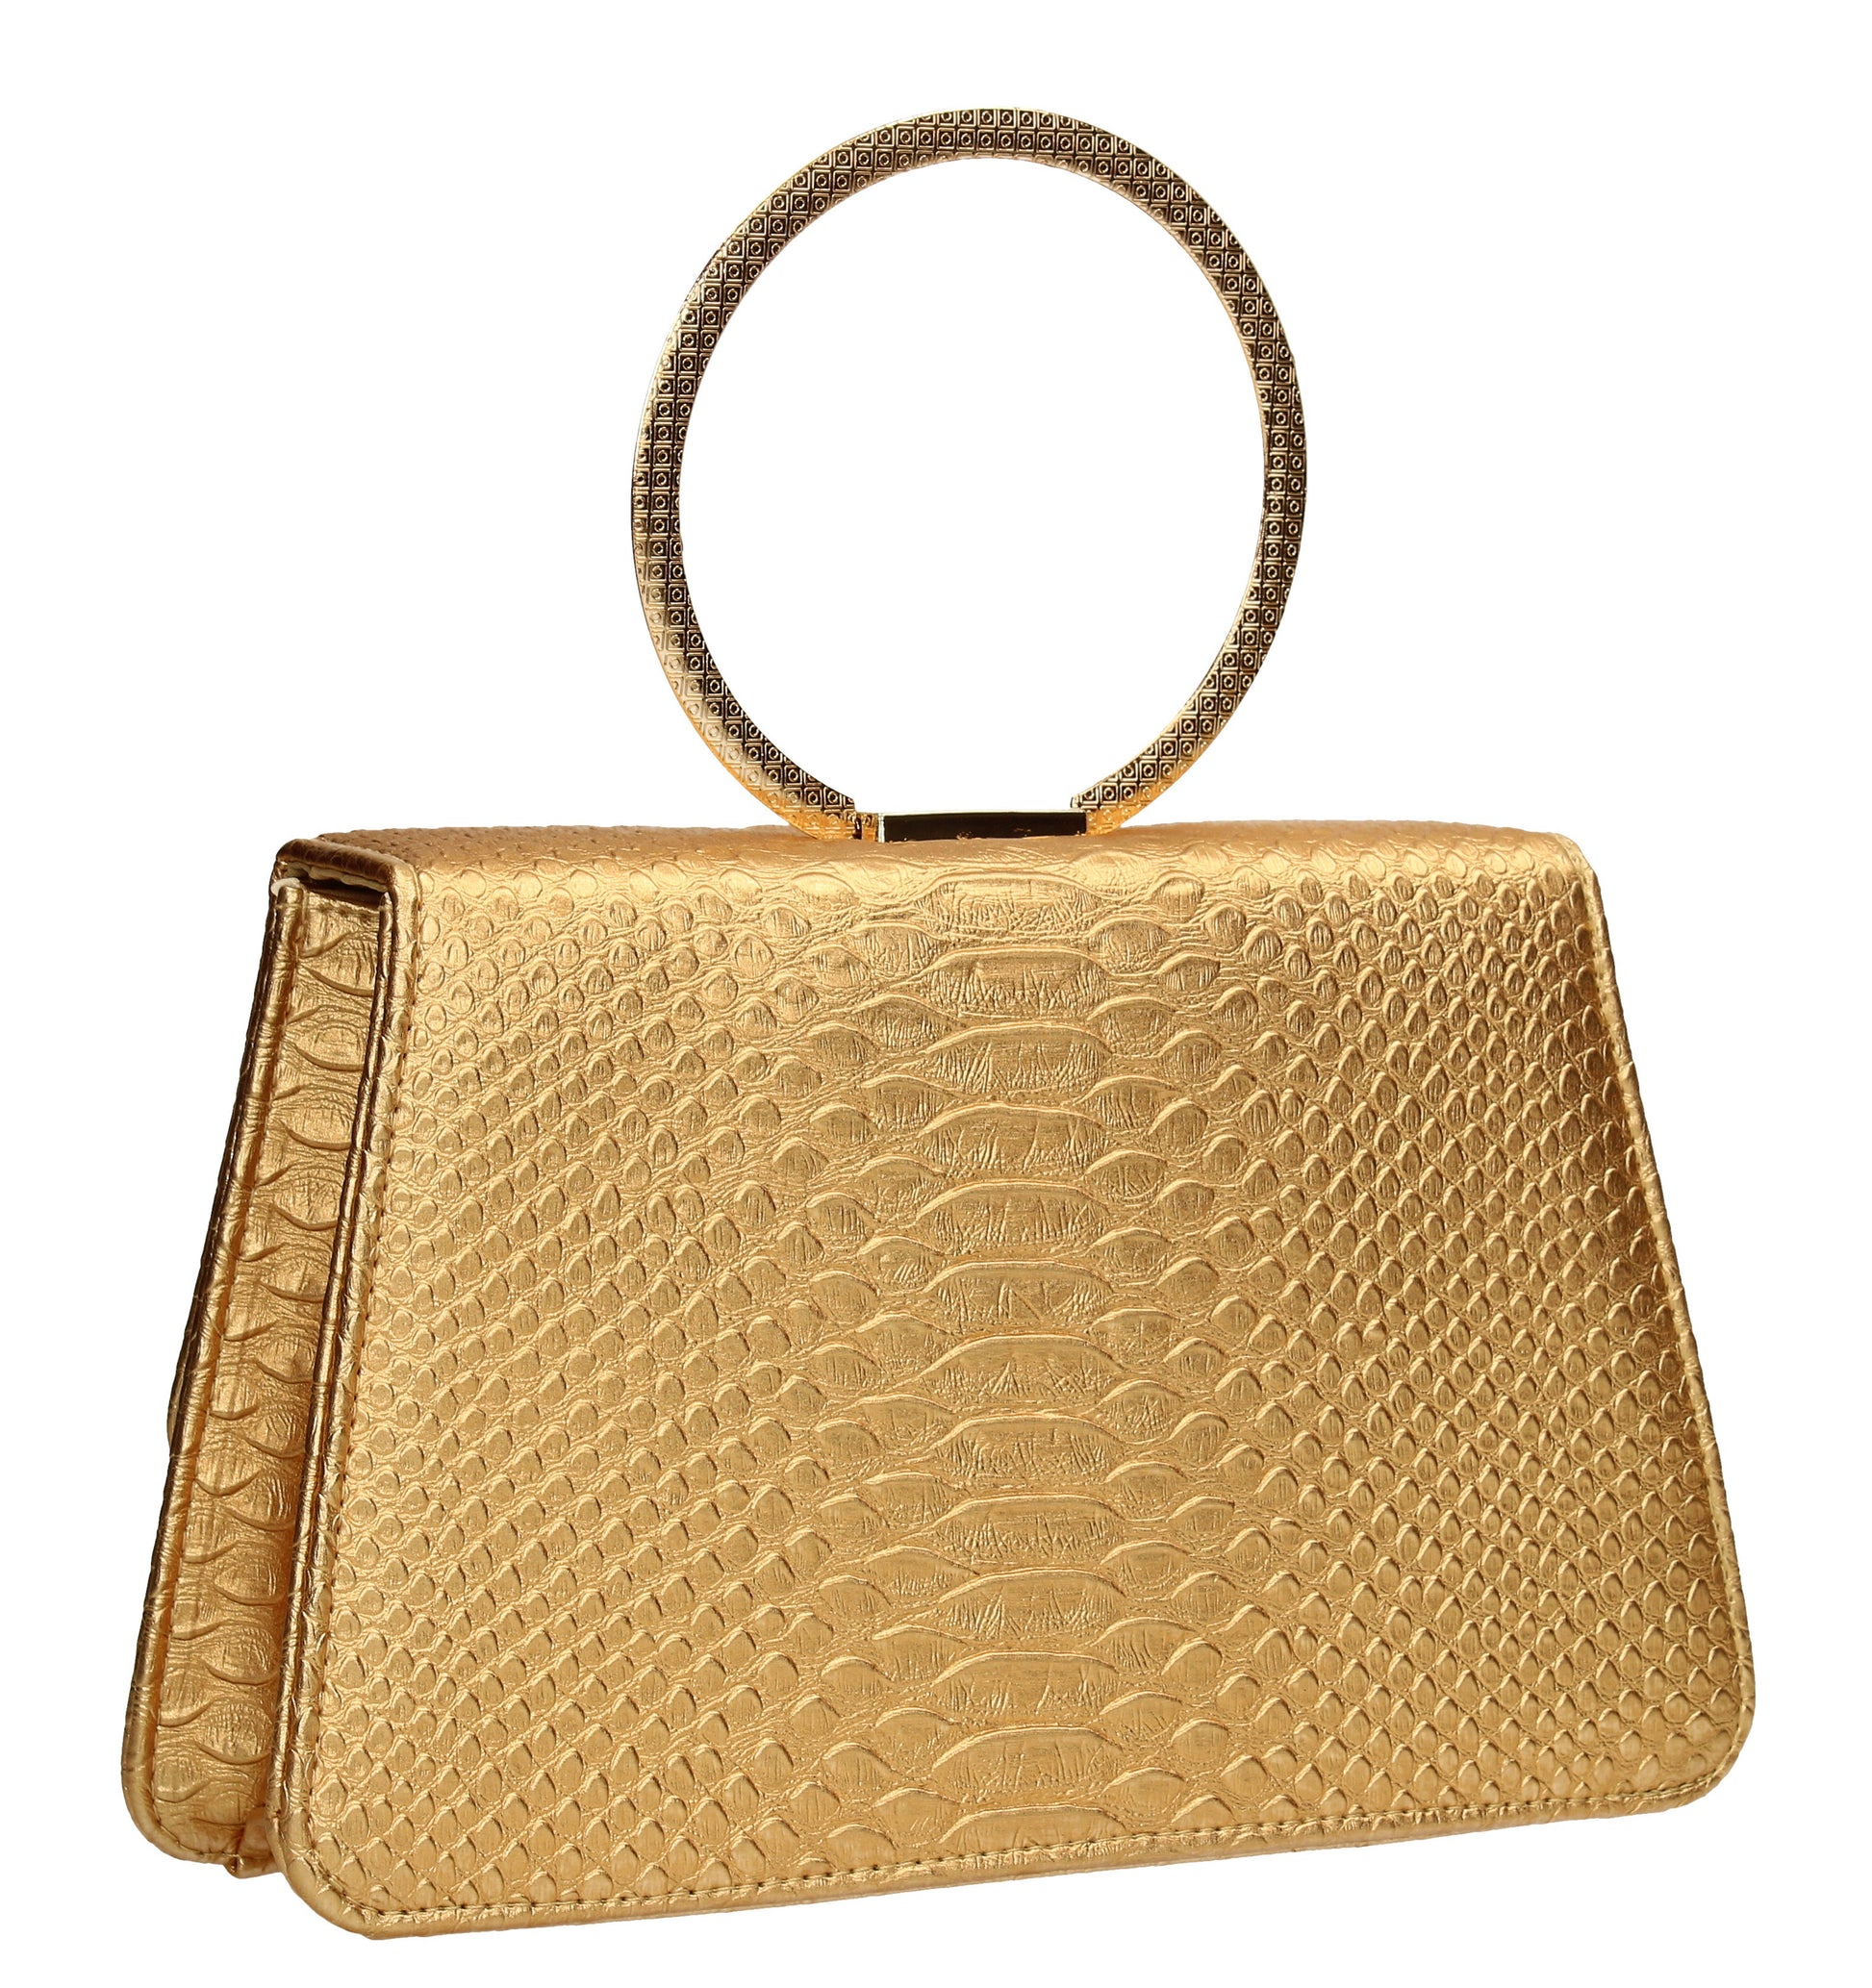 SWANKYSWANS Piper Clutch Bag Gold Cute Cheap Clutch Bag For Weddings School and Work